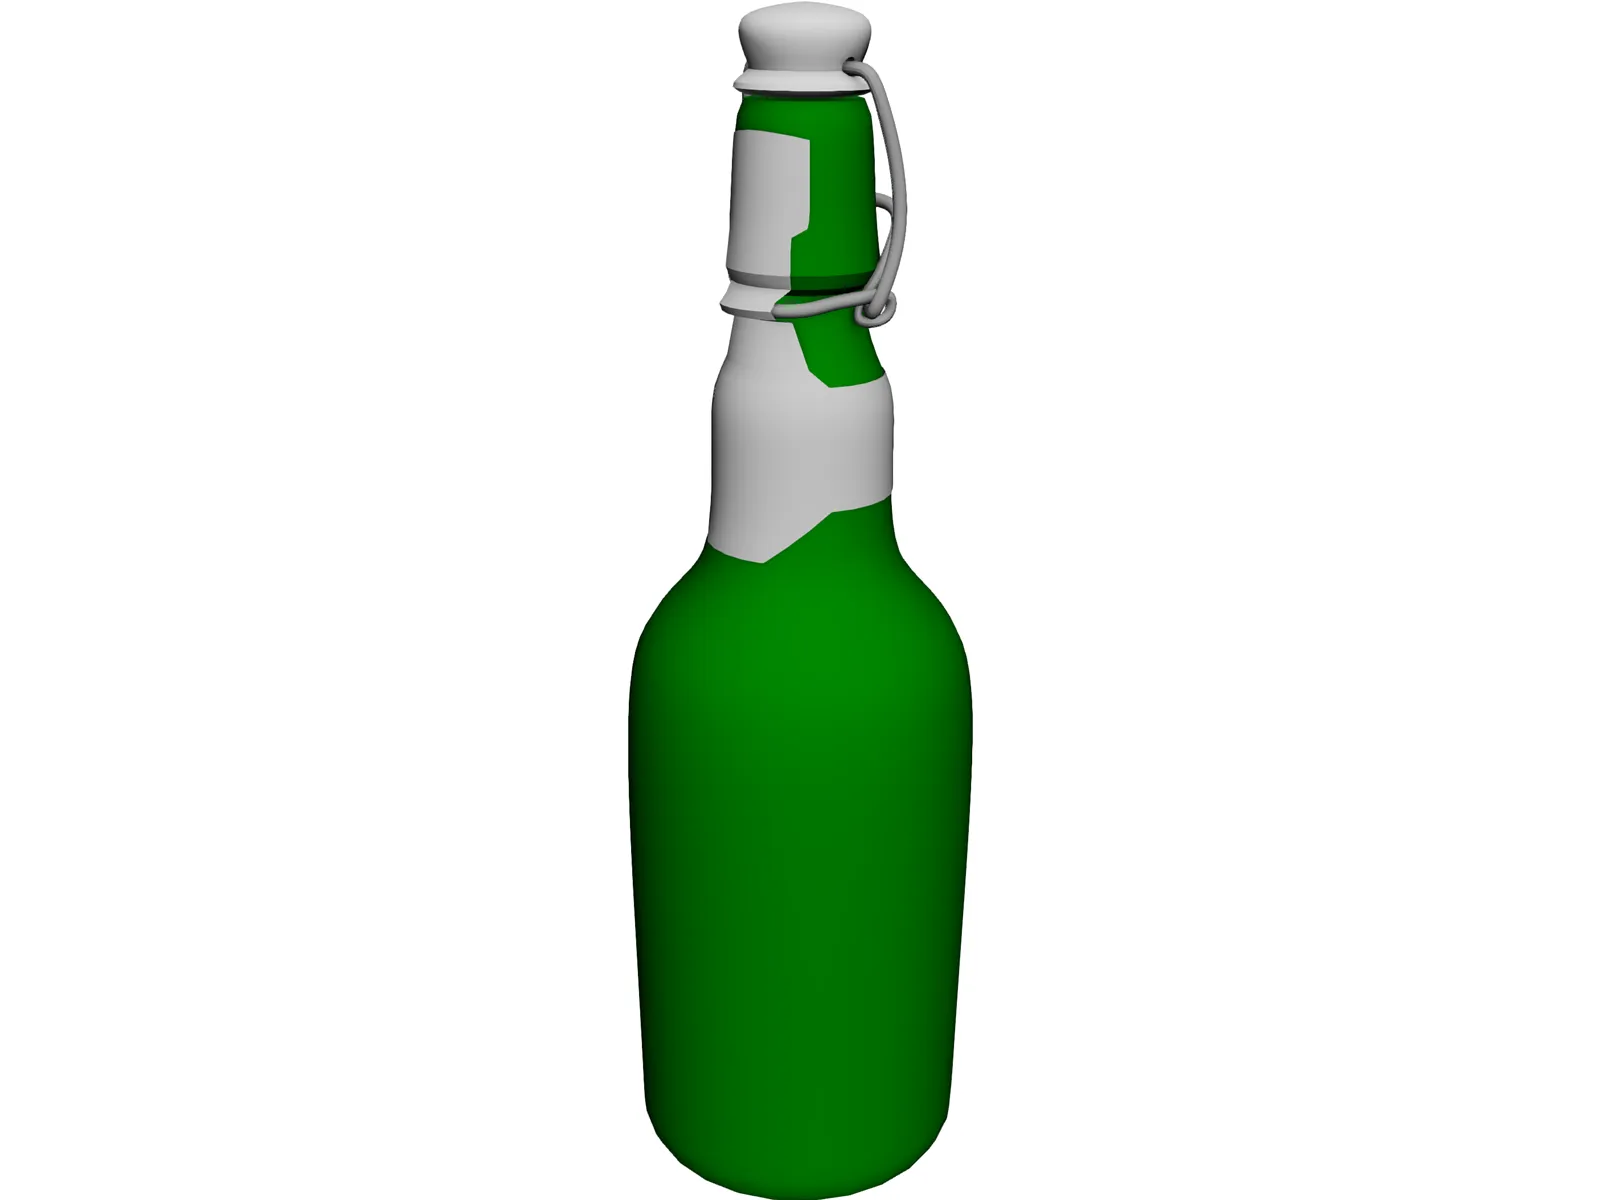 Grolsch Beer Bottle 3D Model